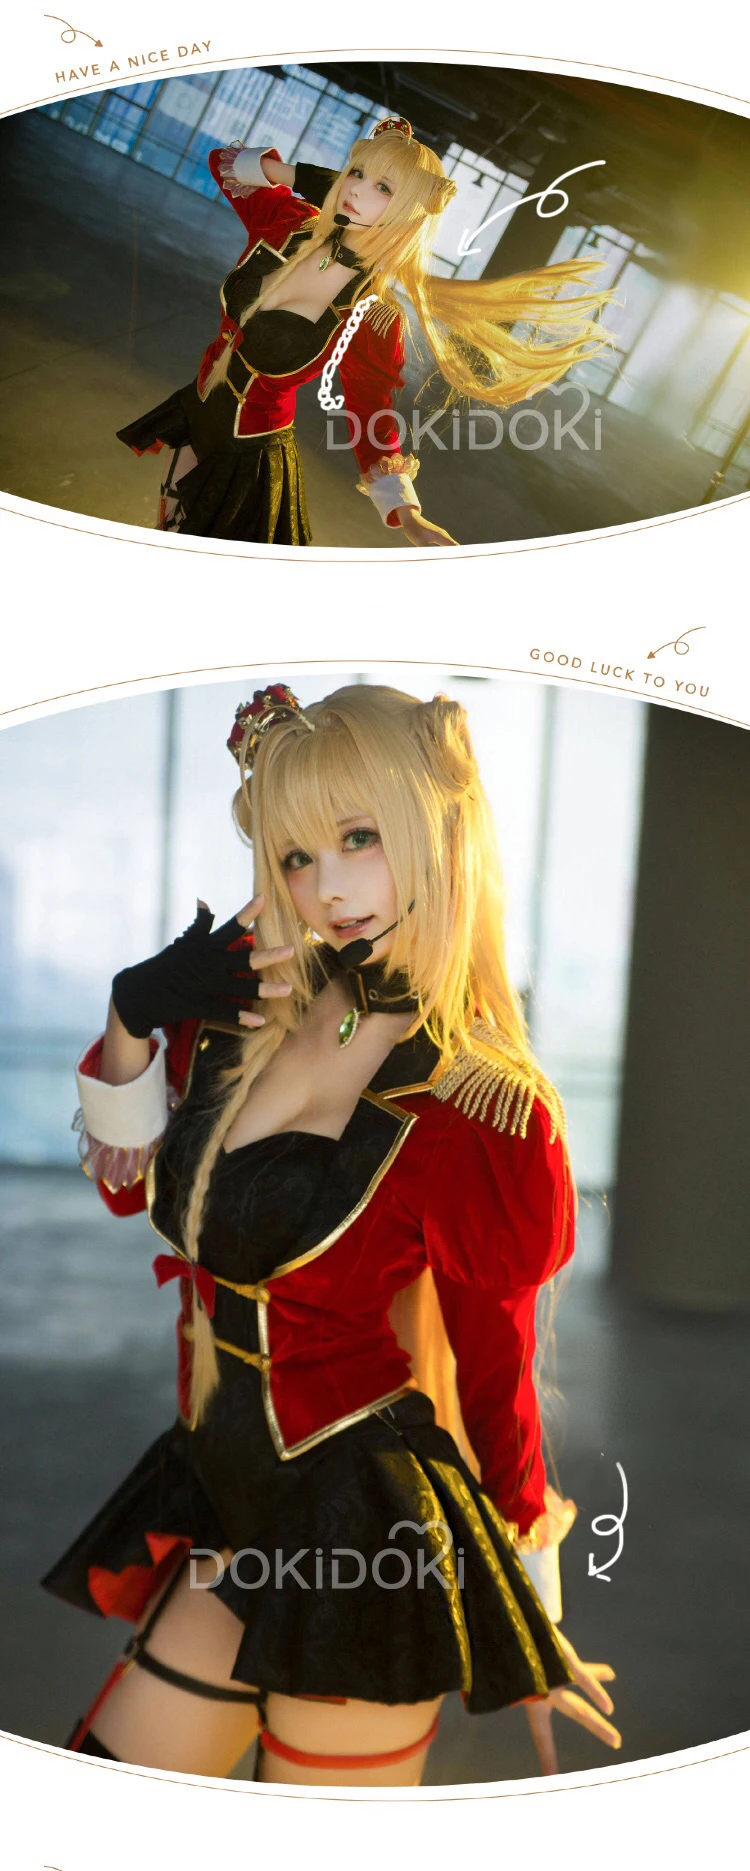 DokiDoki игра Fate Grand Order Nero, для косплея Fate Косплей Idol Nero Красная форма FGO женский костюм на Хэллоуин